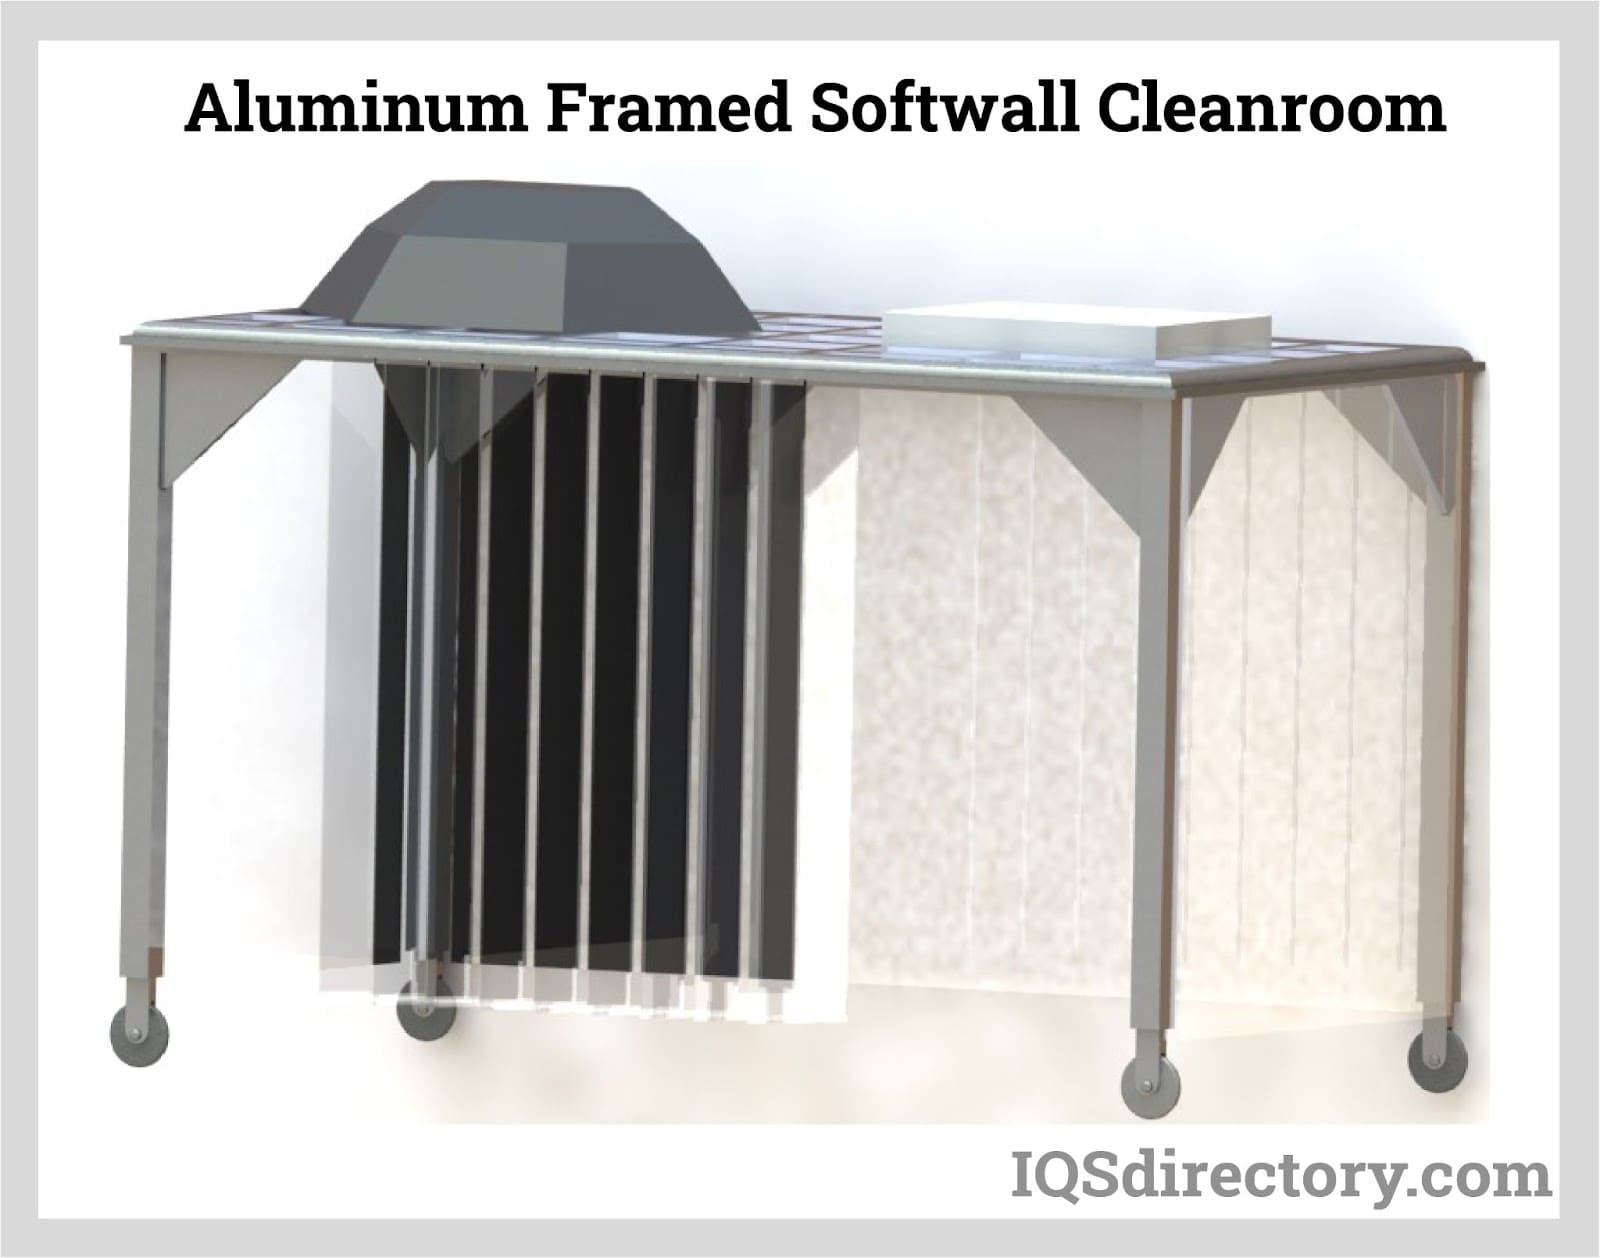 Aluminum Framed Softwall Cleanroom